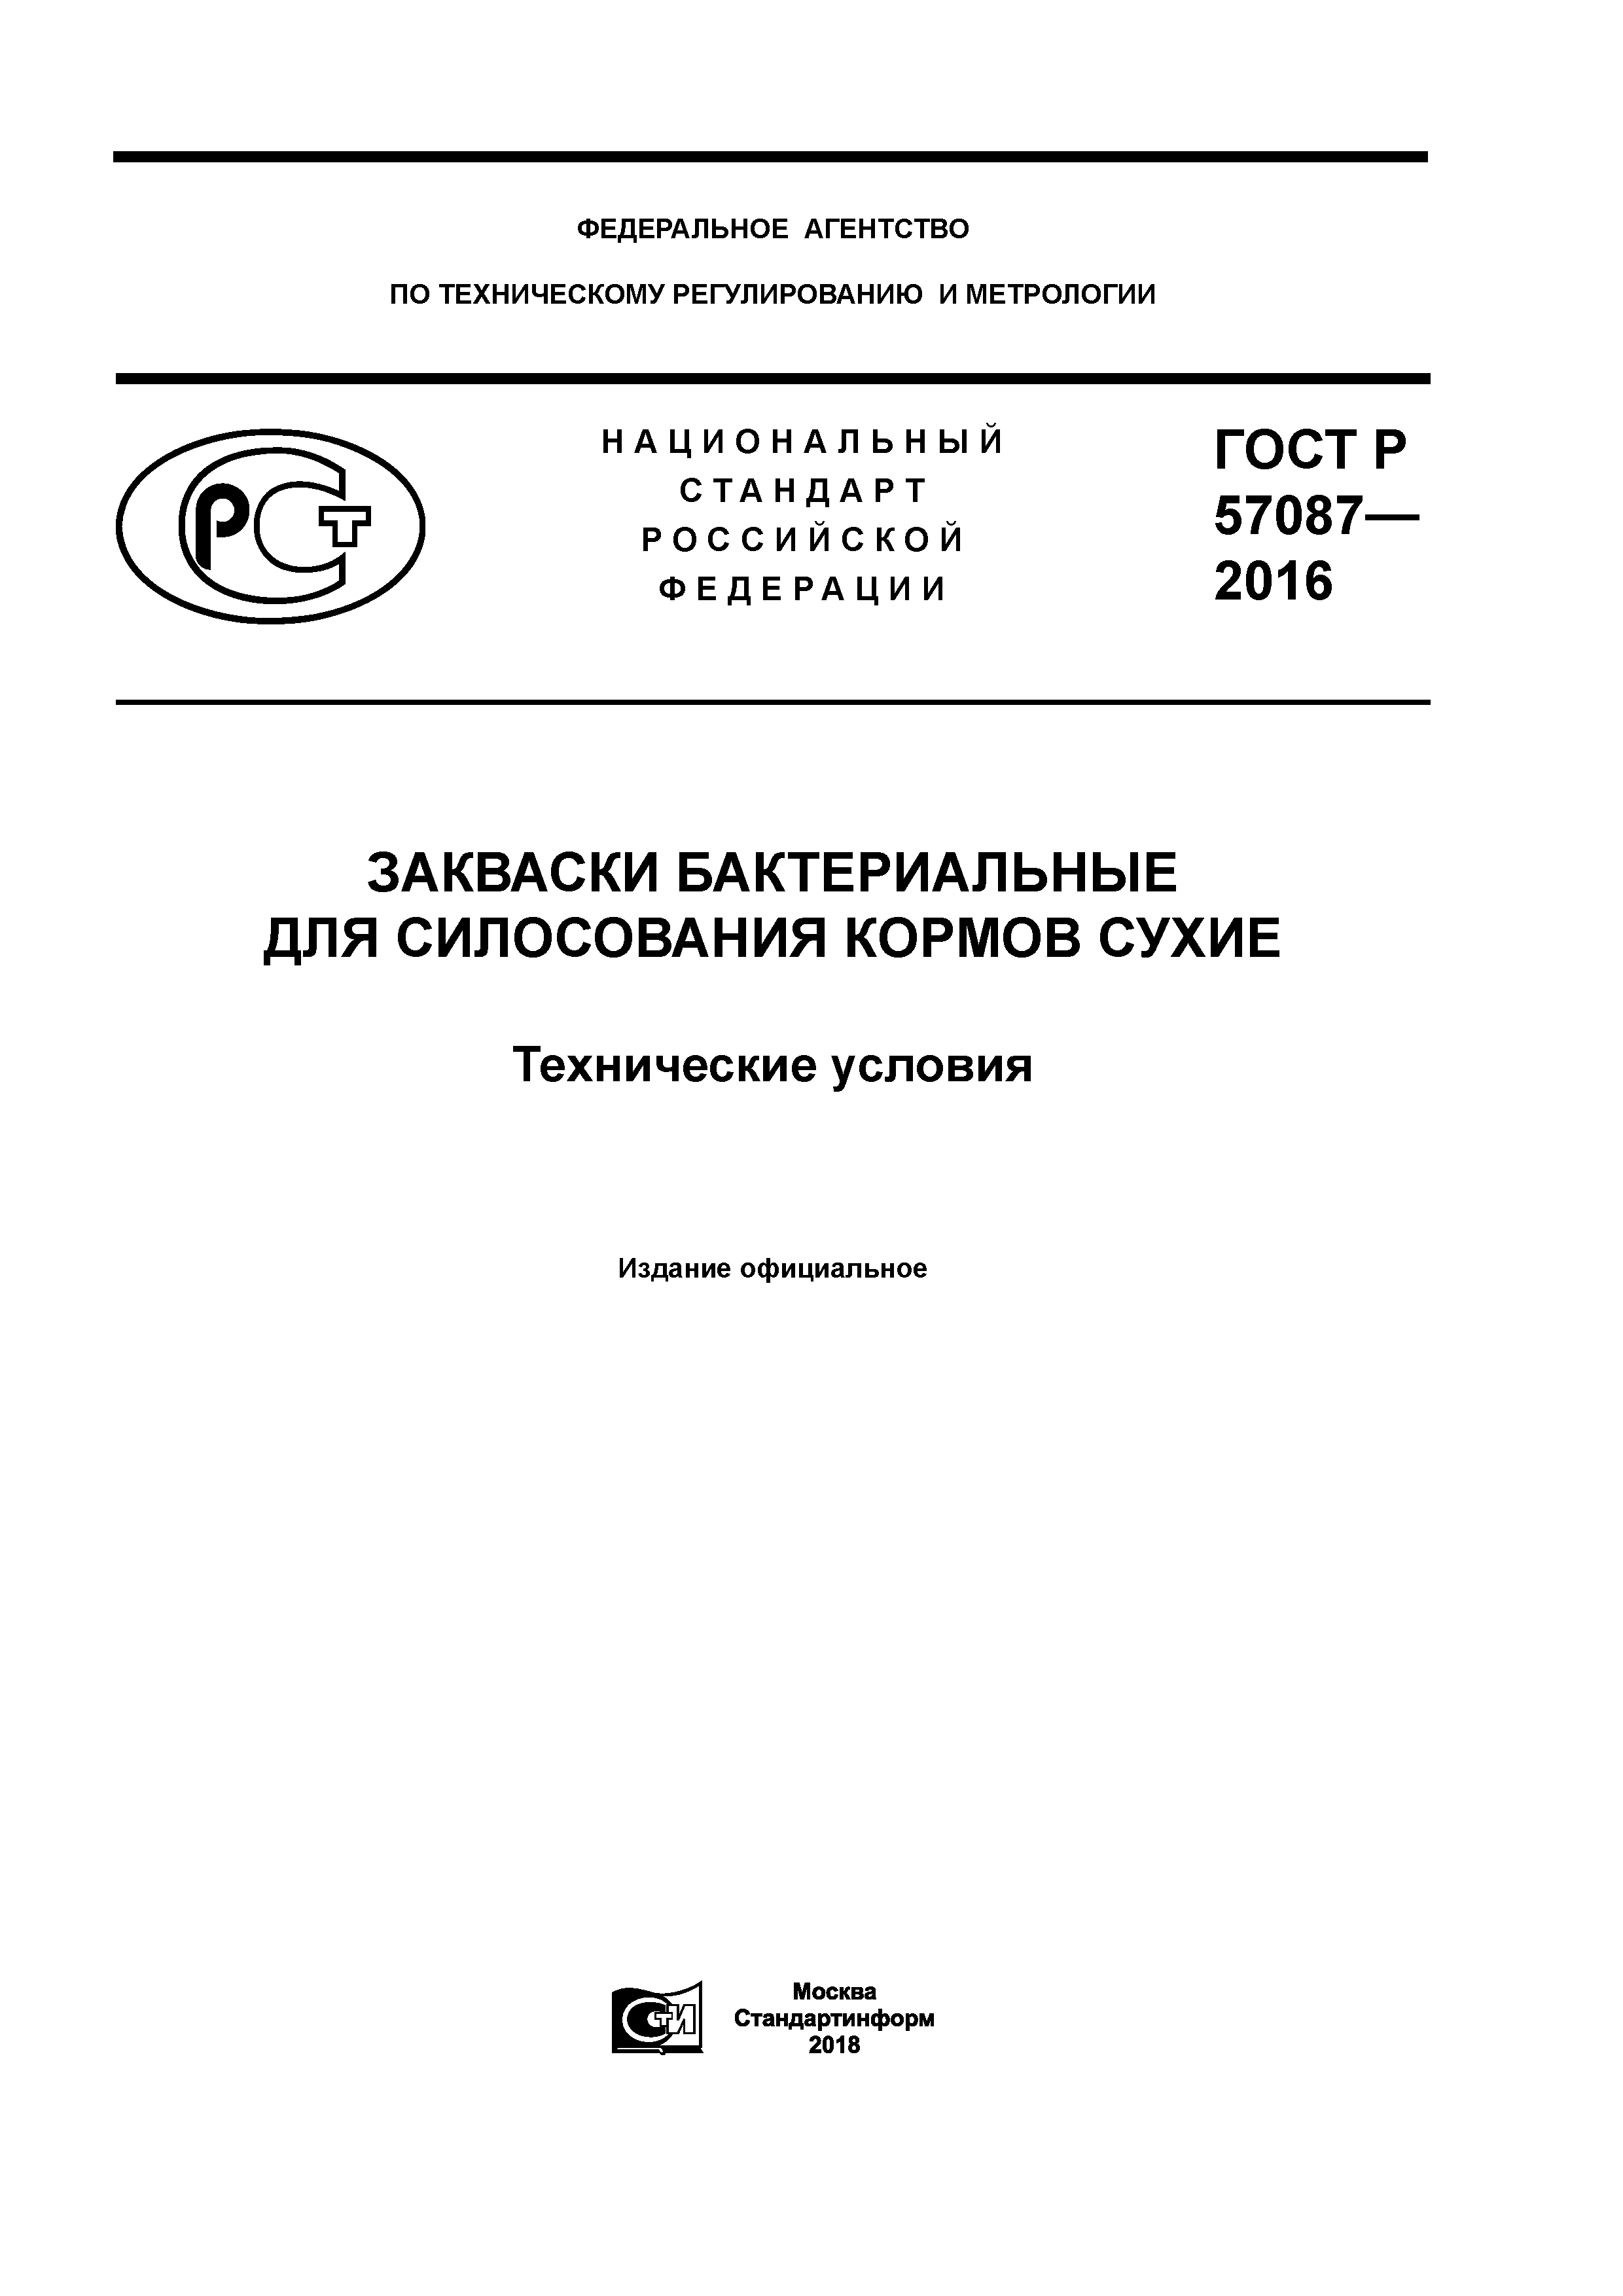 ГОСТ Р 57087-2016